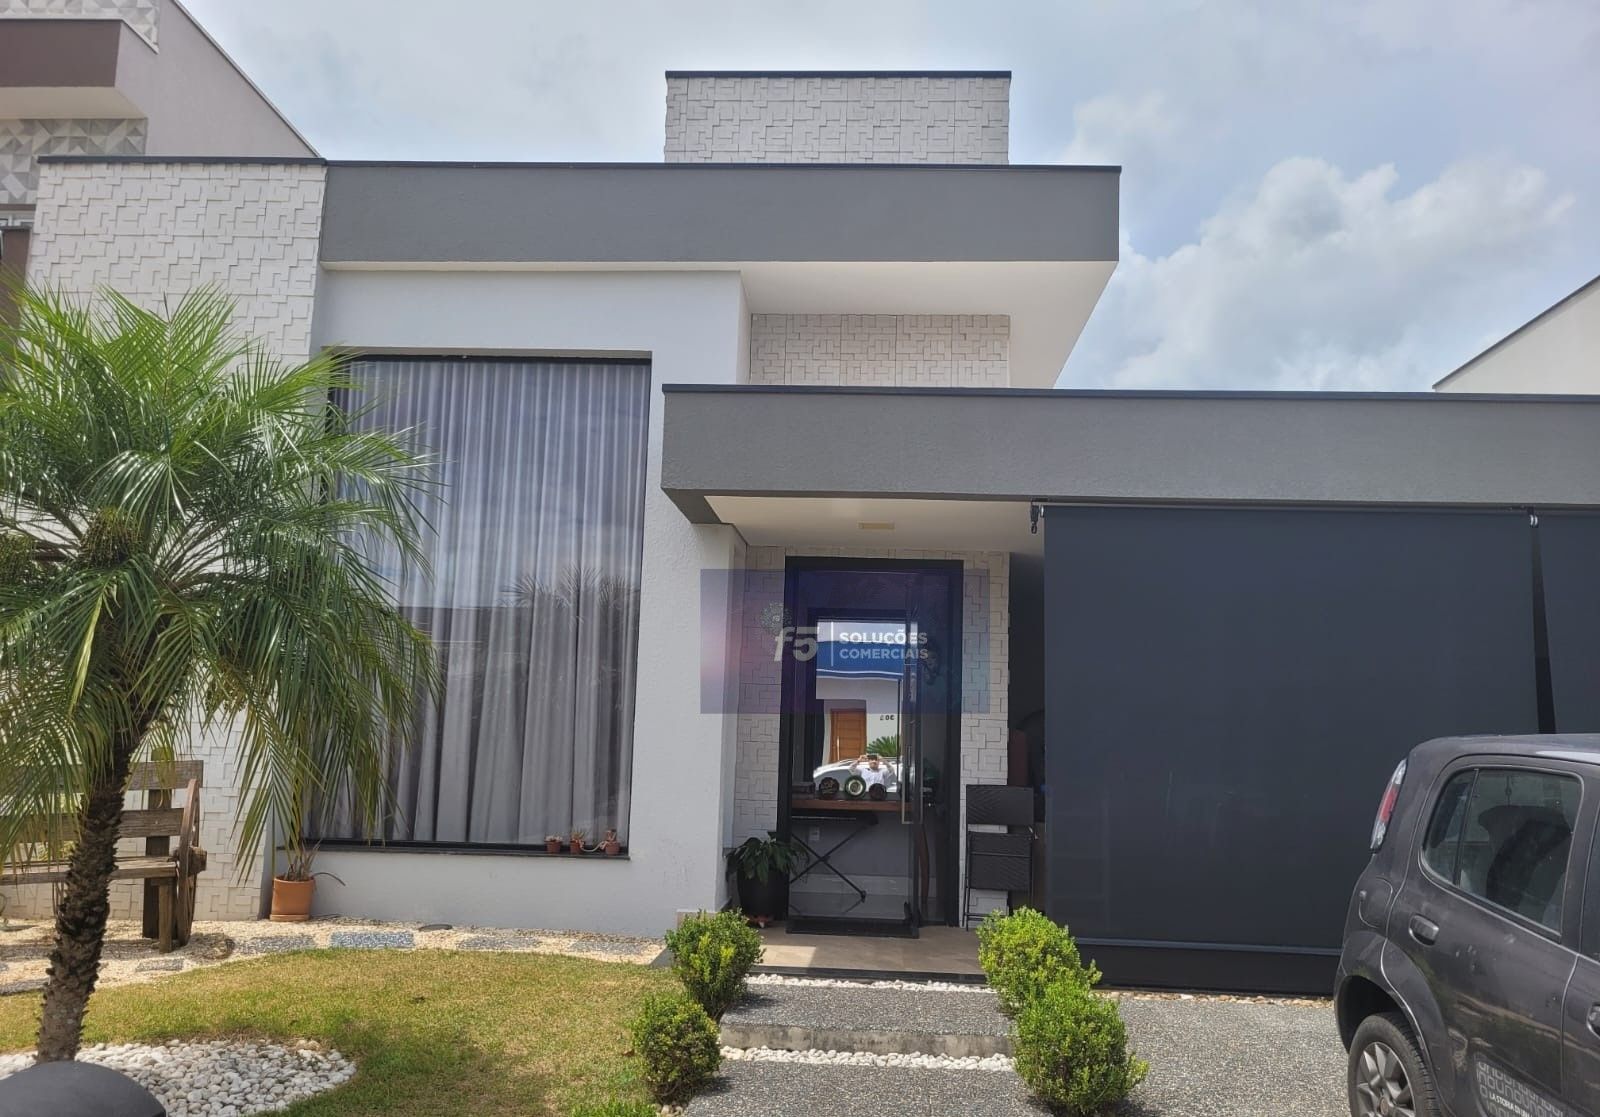 Casa em condomnio  venda  no Jardim Residencial Dona Lucilla - Indaiatuba, SP. Imveis